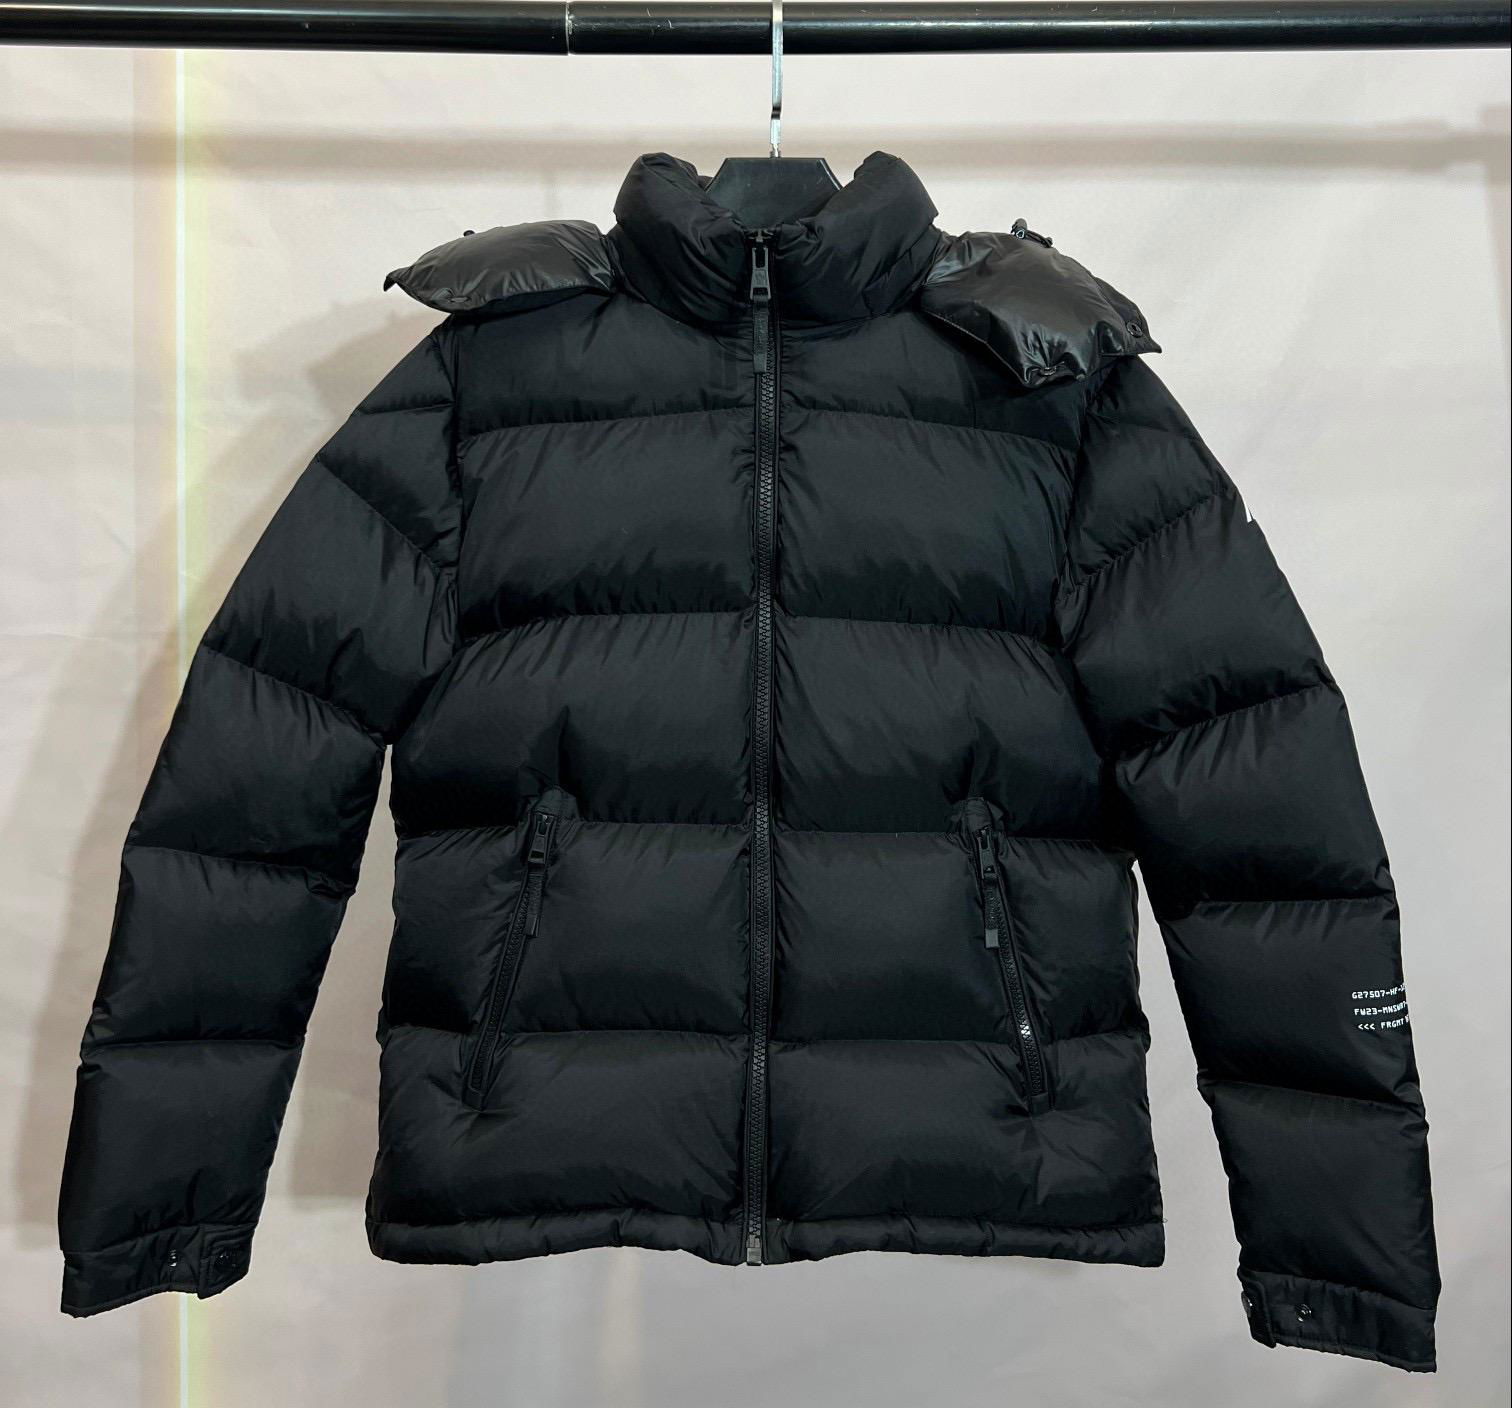 Cheap online         Jacket         X Fragment down jacket for men         Coat 2